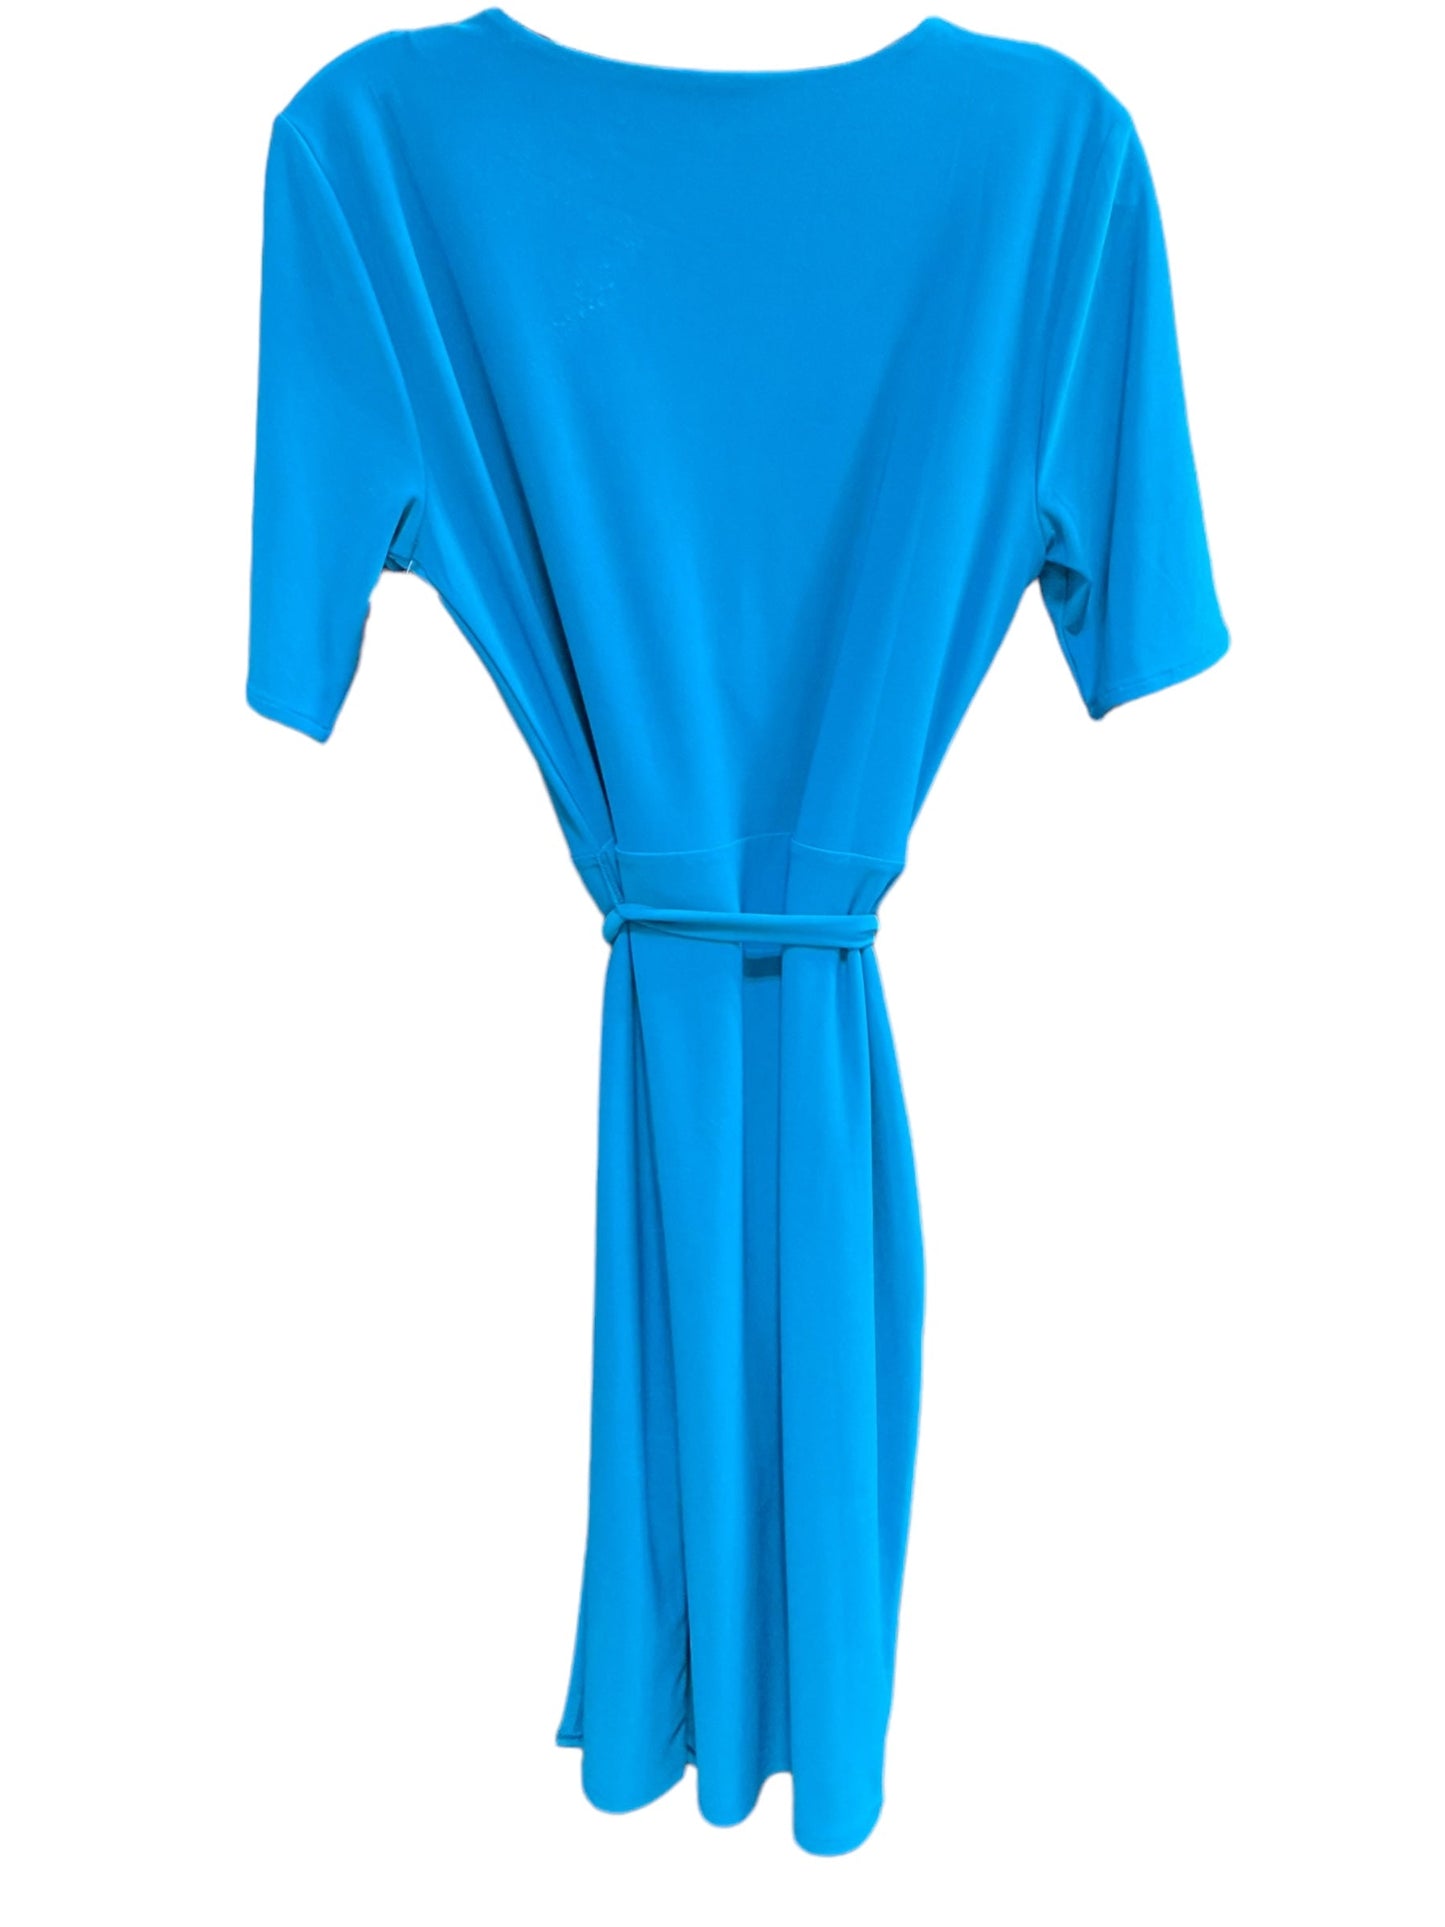 Blue Dress Casual Short White House Black Market, Size 8